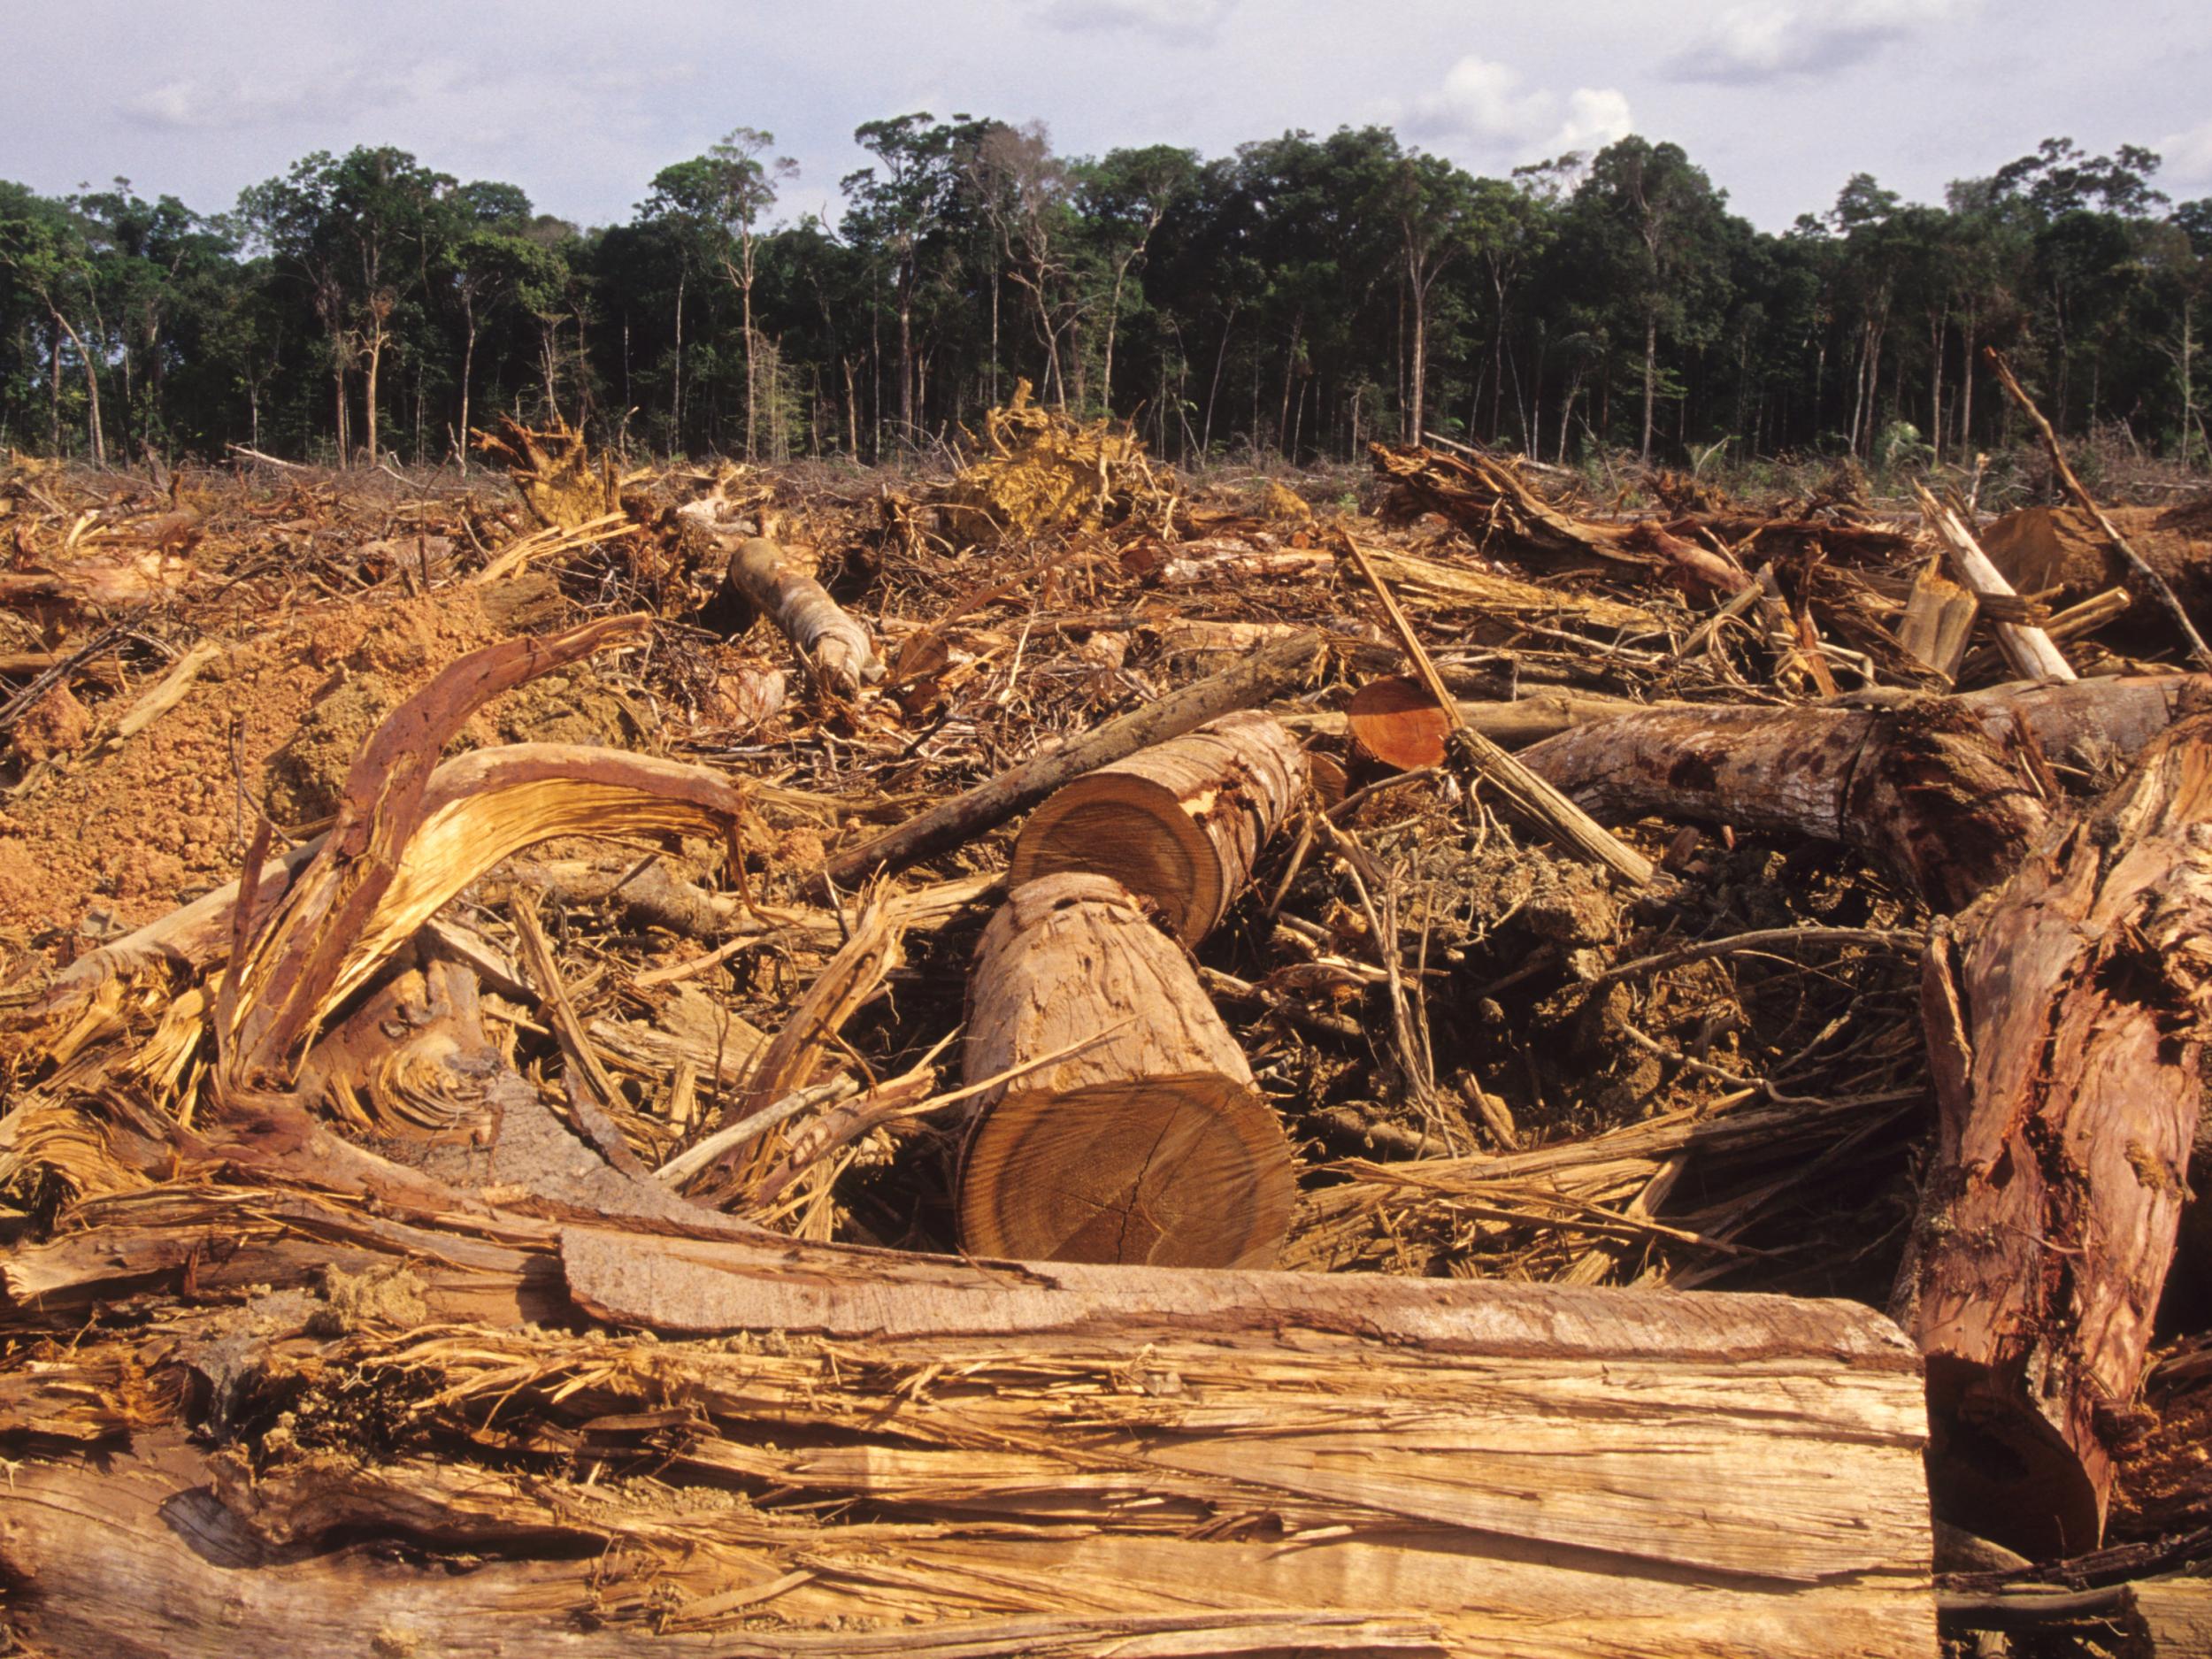 Deforestation in the Amazon is already expected to increase under new Brazilian president Jair Bolsonaro